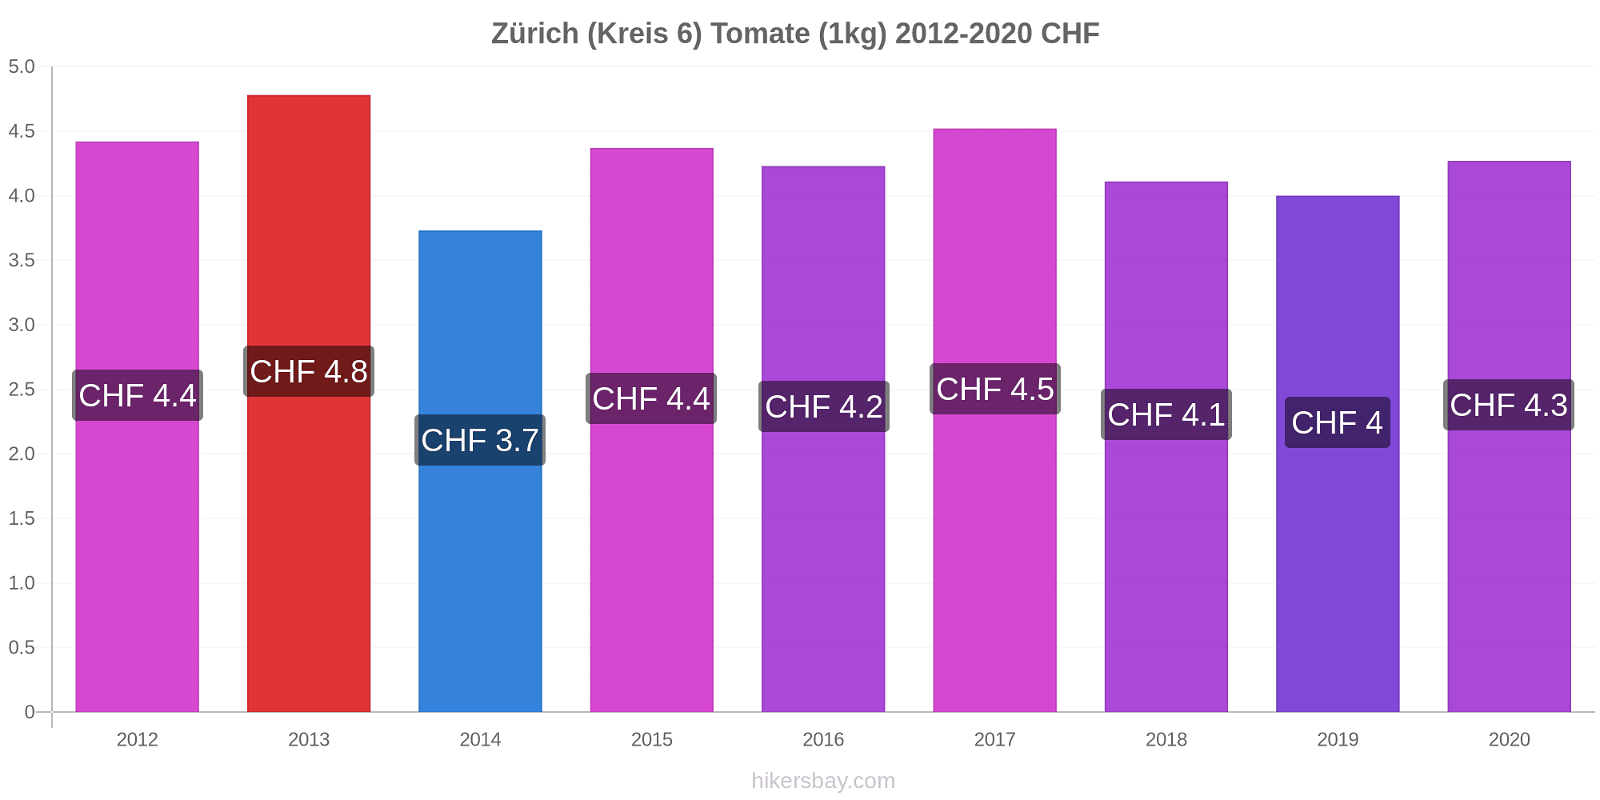 Zürich (Kreis 6) modificări de preț Tomate (1kg) hikersbay.com